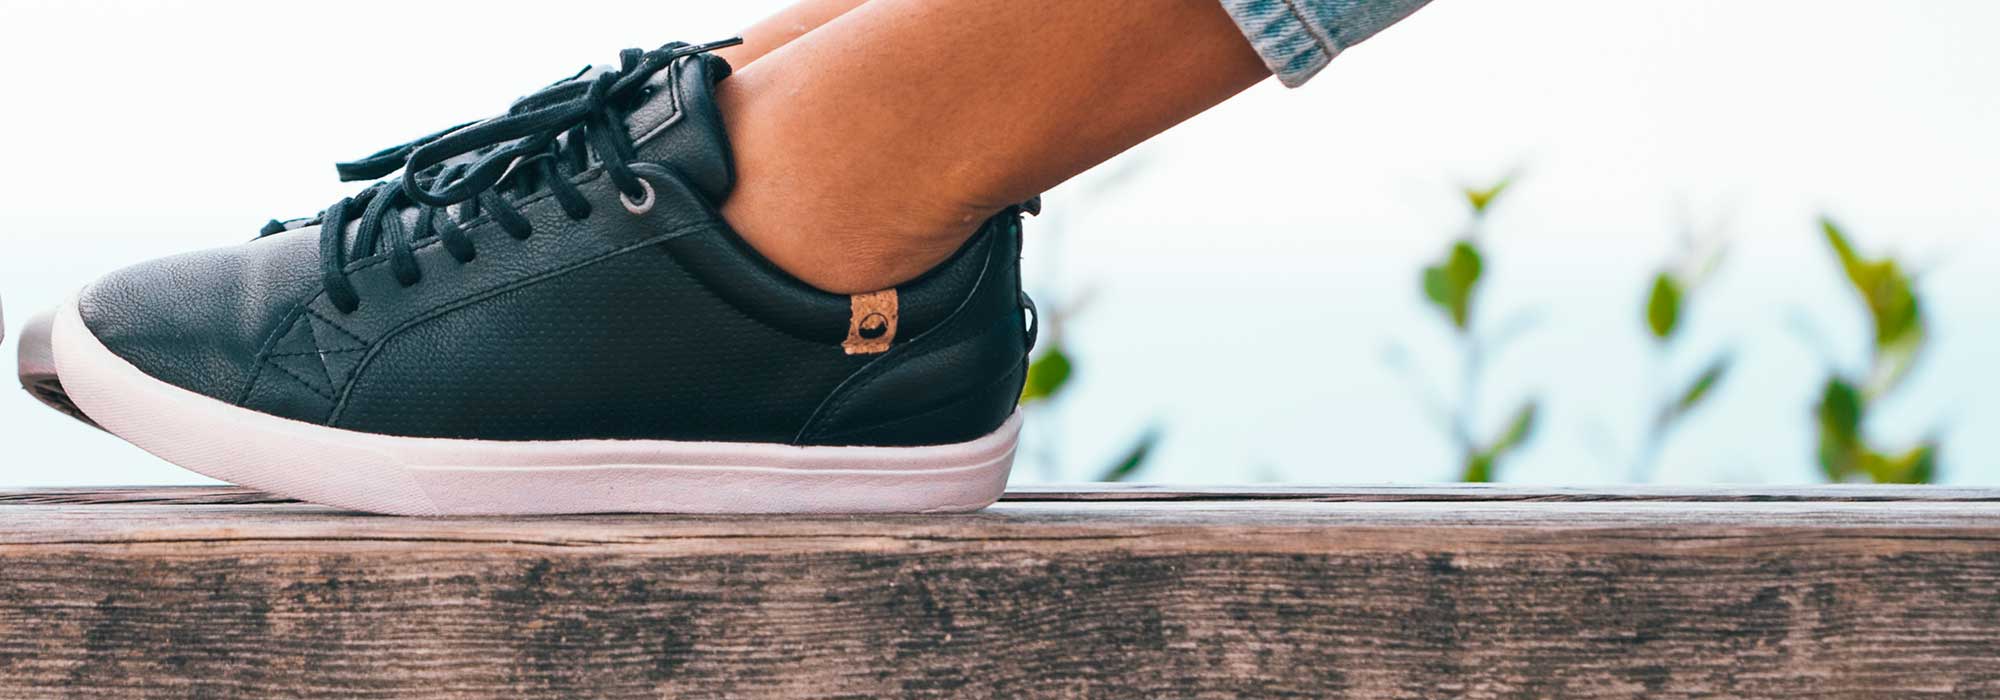 Saola Women's Shoes : Eco-Friendly Cannon VL Black Sneakers